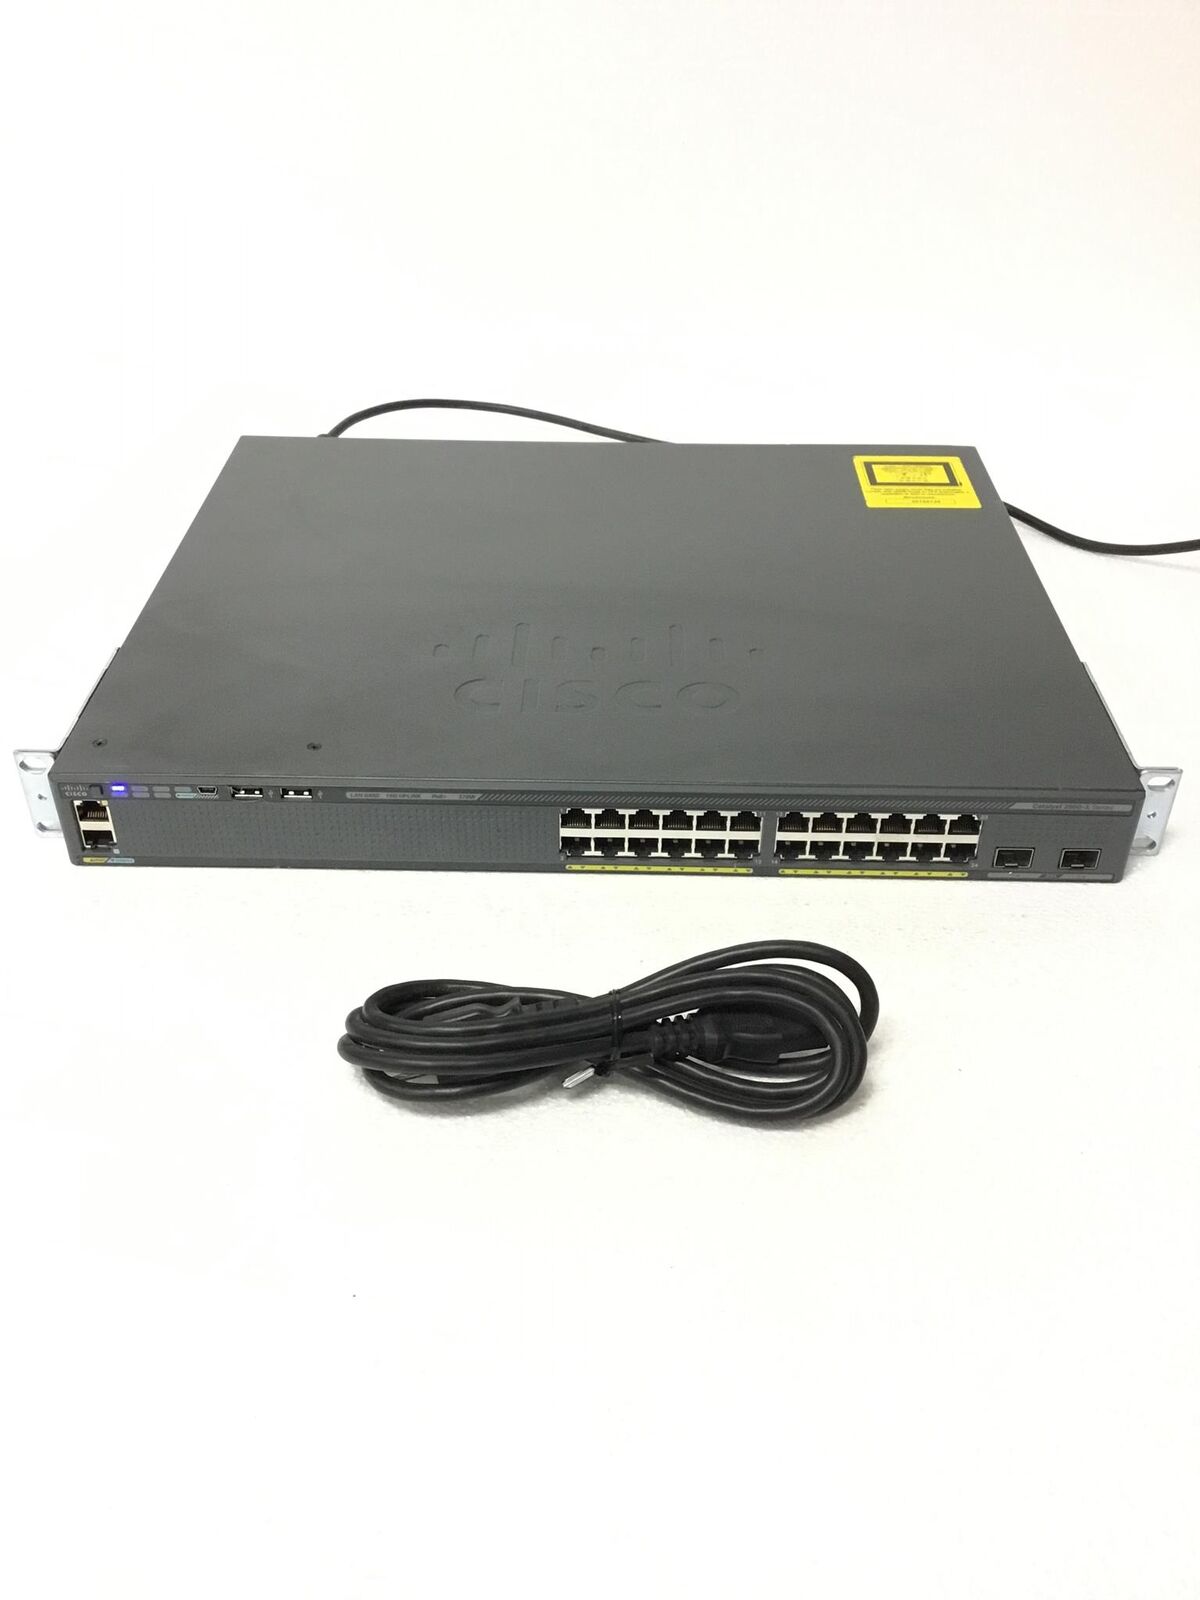 CISCO CATALYST 2960-X WS-C2960X-24PD-L 24 Port Network Switch w/Rack Ears QTY